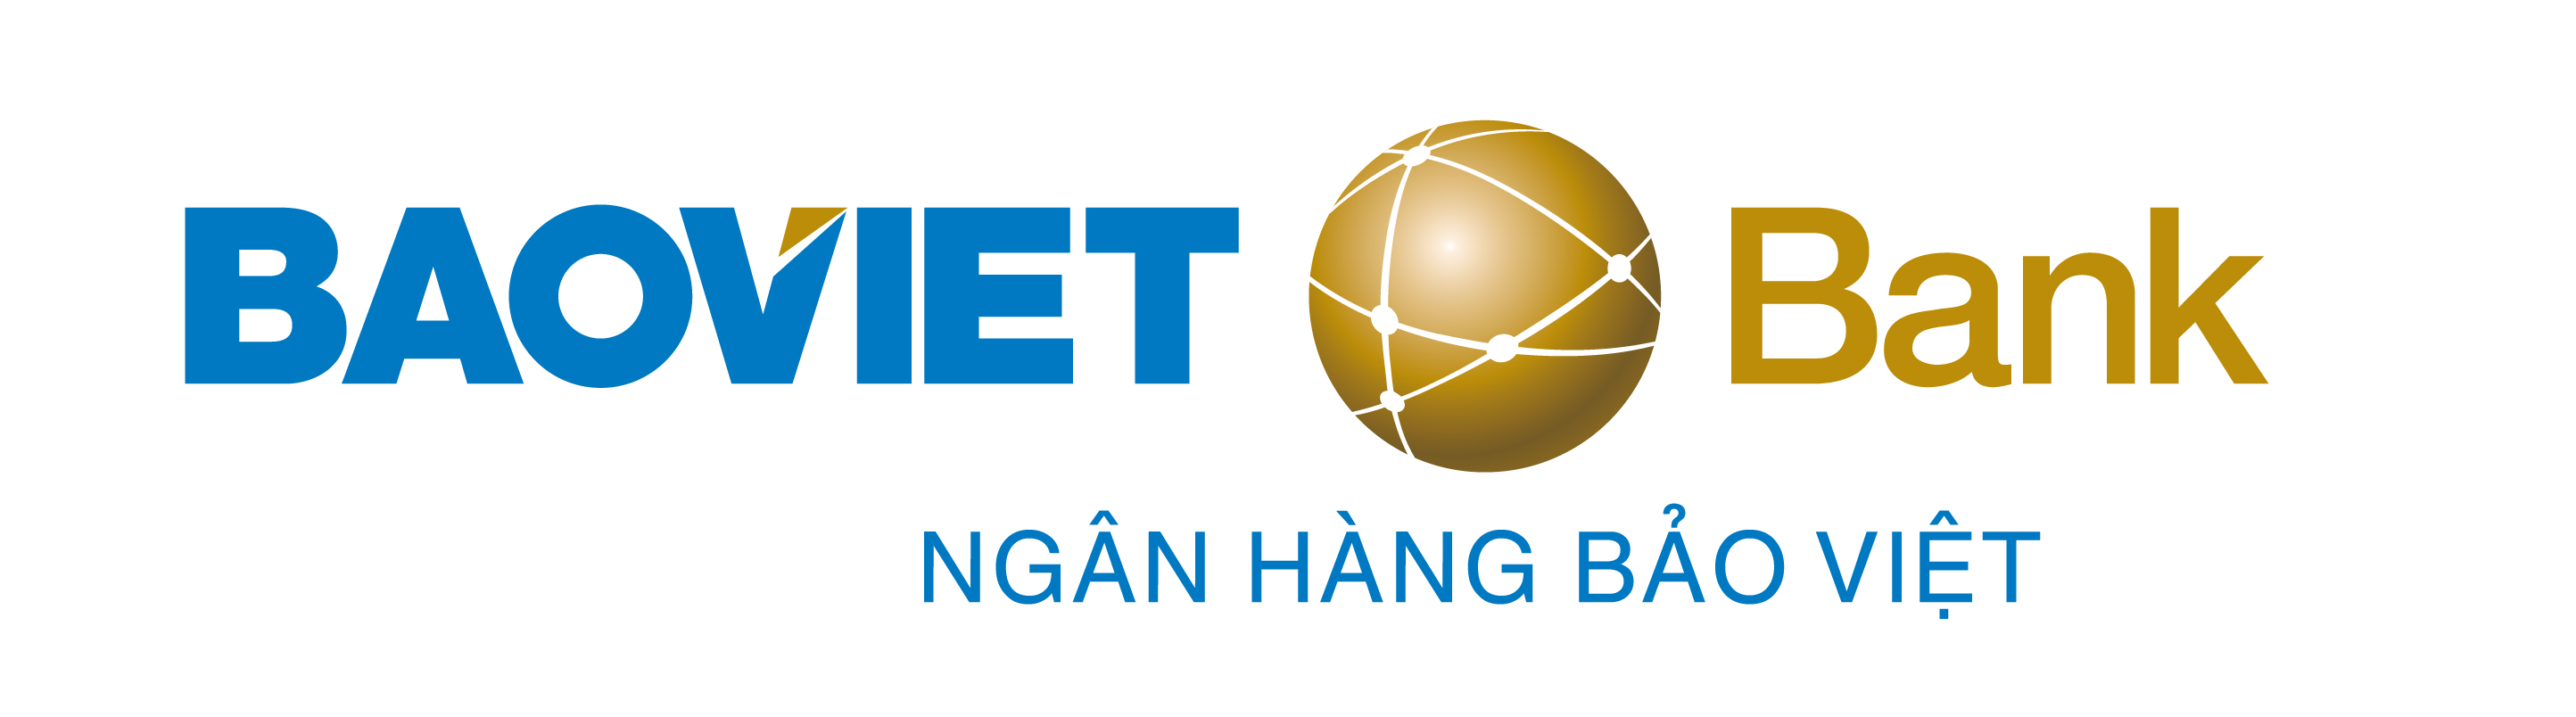 BAOVIET Bank Logo photo - 1